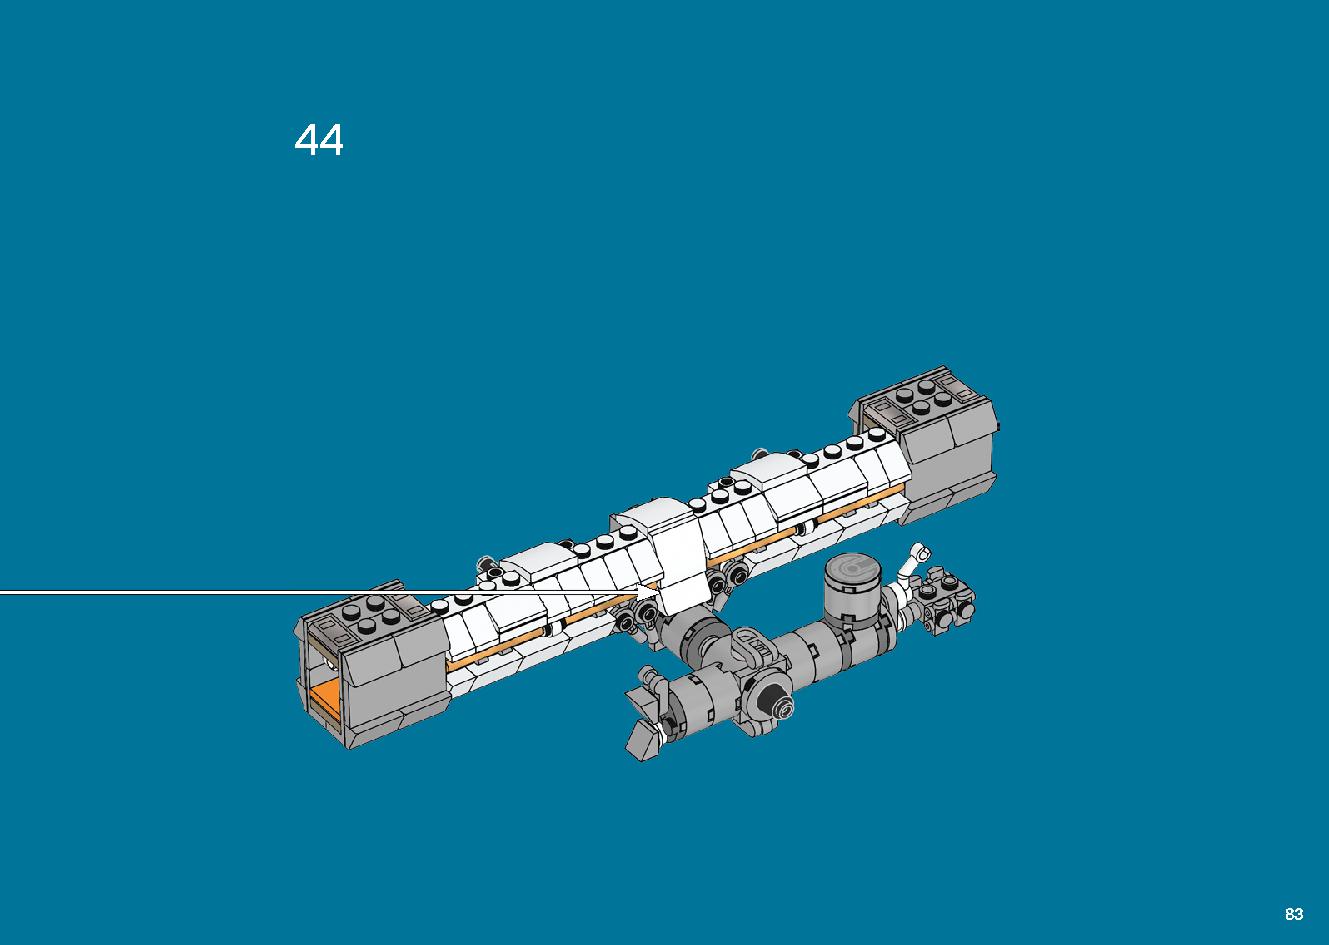 International Space Station 21321 レゴの商品情報 レゴの説明書・組立方法 83 page